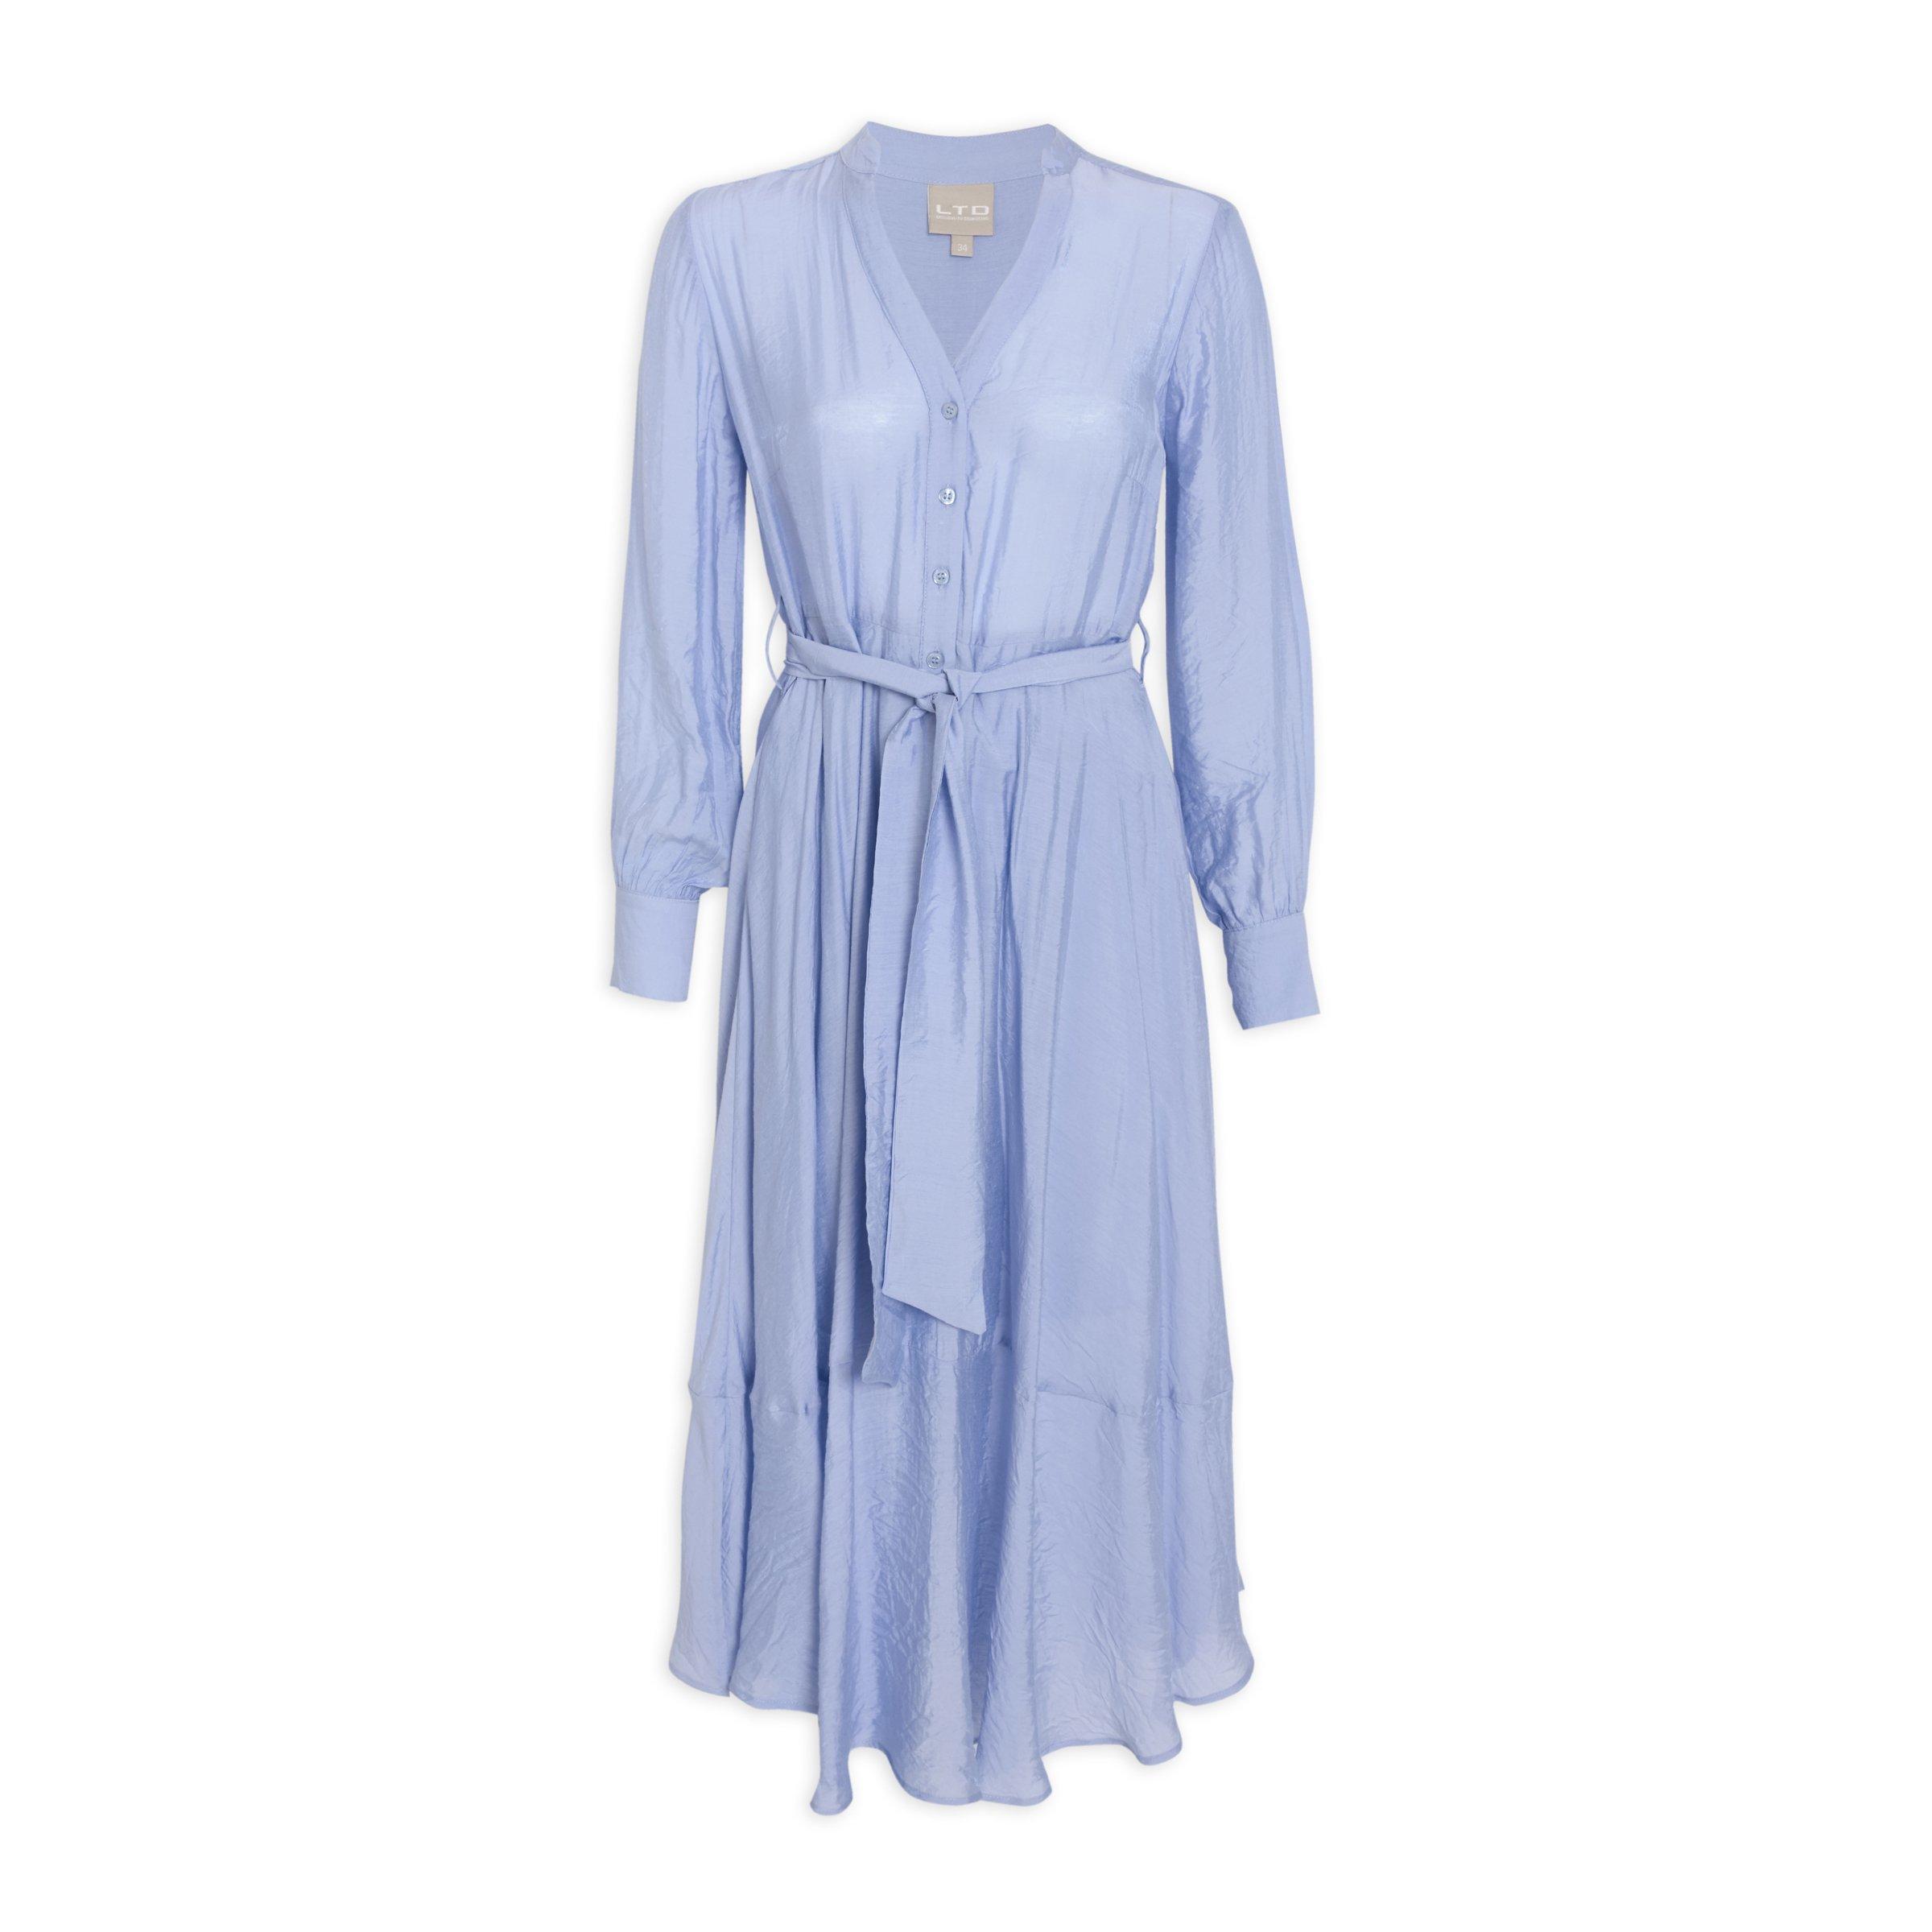 Buy LTD Woman Sky Blue Shirt Dress Online | Truworths